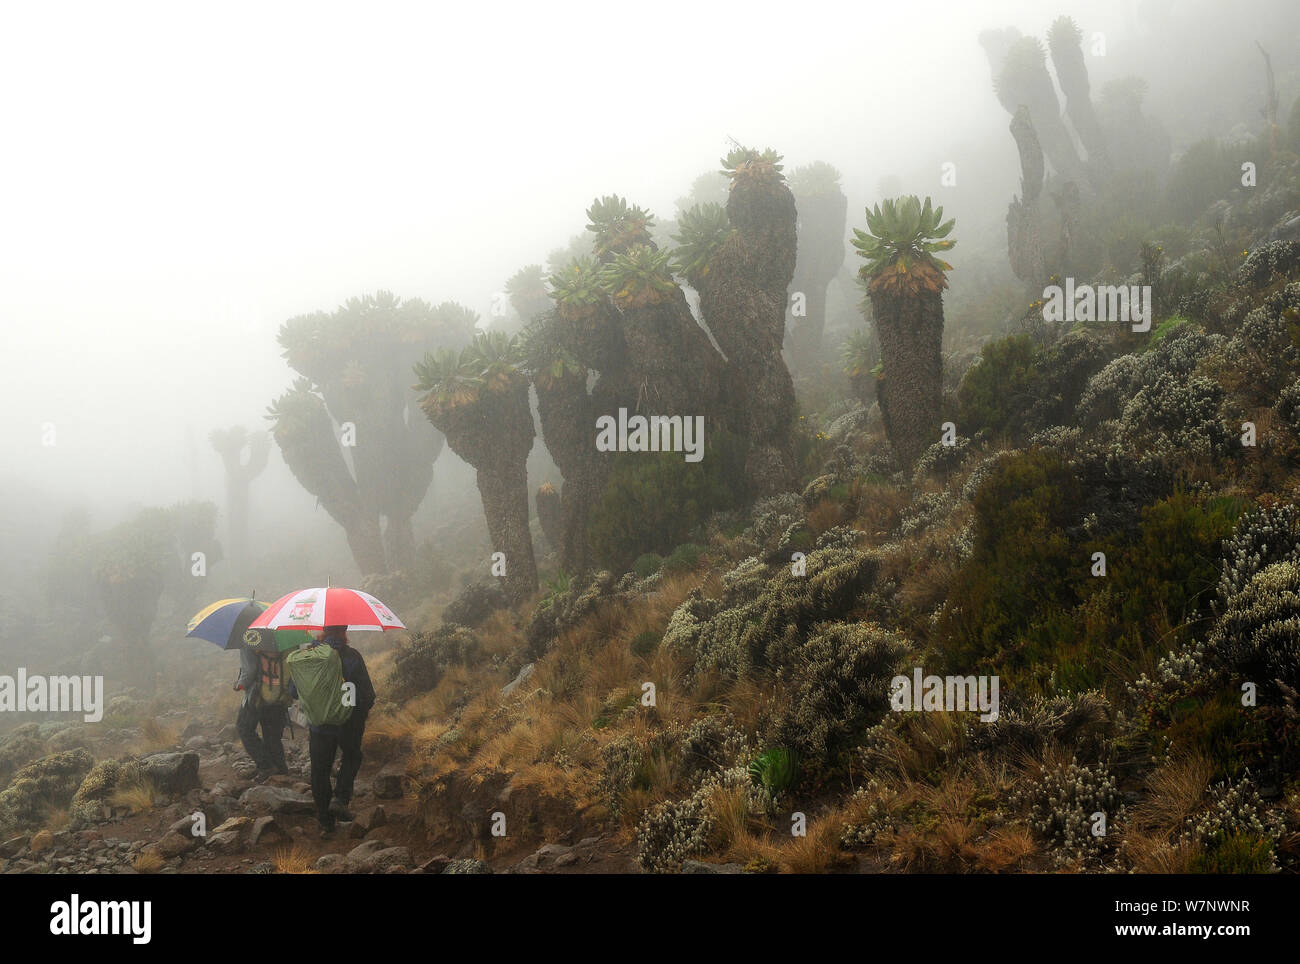 Giant grounsel (Dendrosenecio kilimanjari) plants endemic to the higher altitude zones, with people hiking carrying  umbrellas, subalpine forests of Mount Kilimanjaro, Tanzania Stock Photo